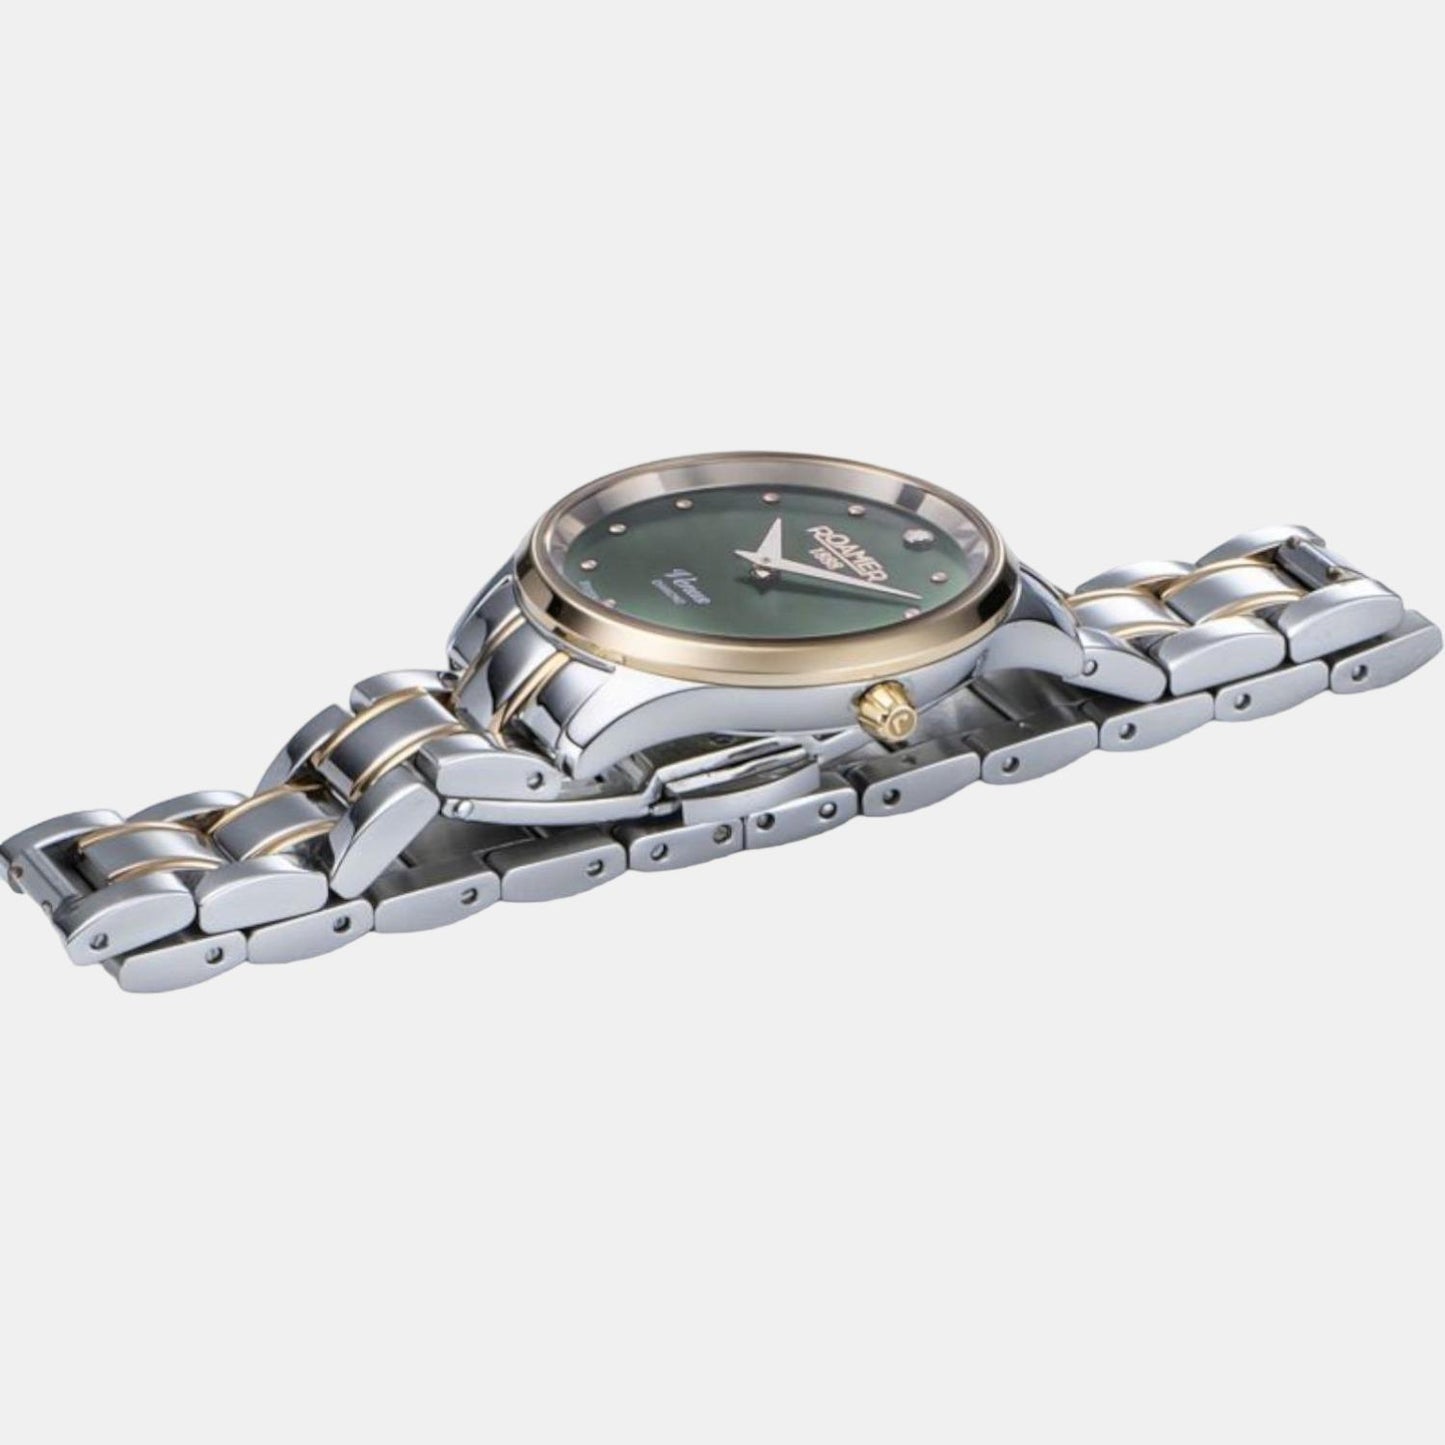 roamer-stainless-steel-green-analog-female-watch-601857-47-59-20